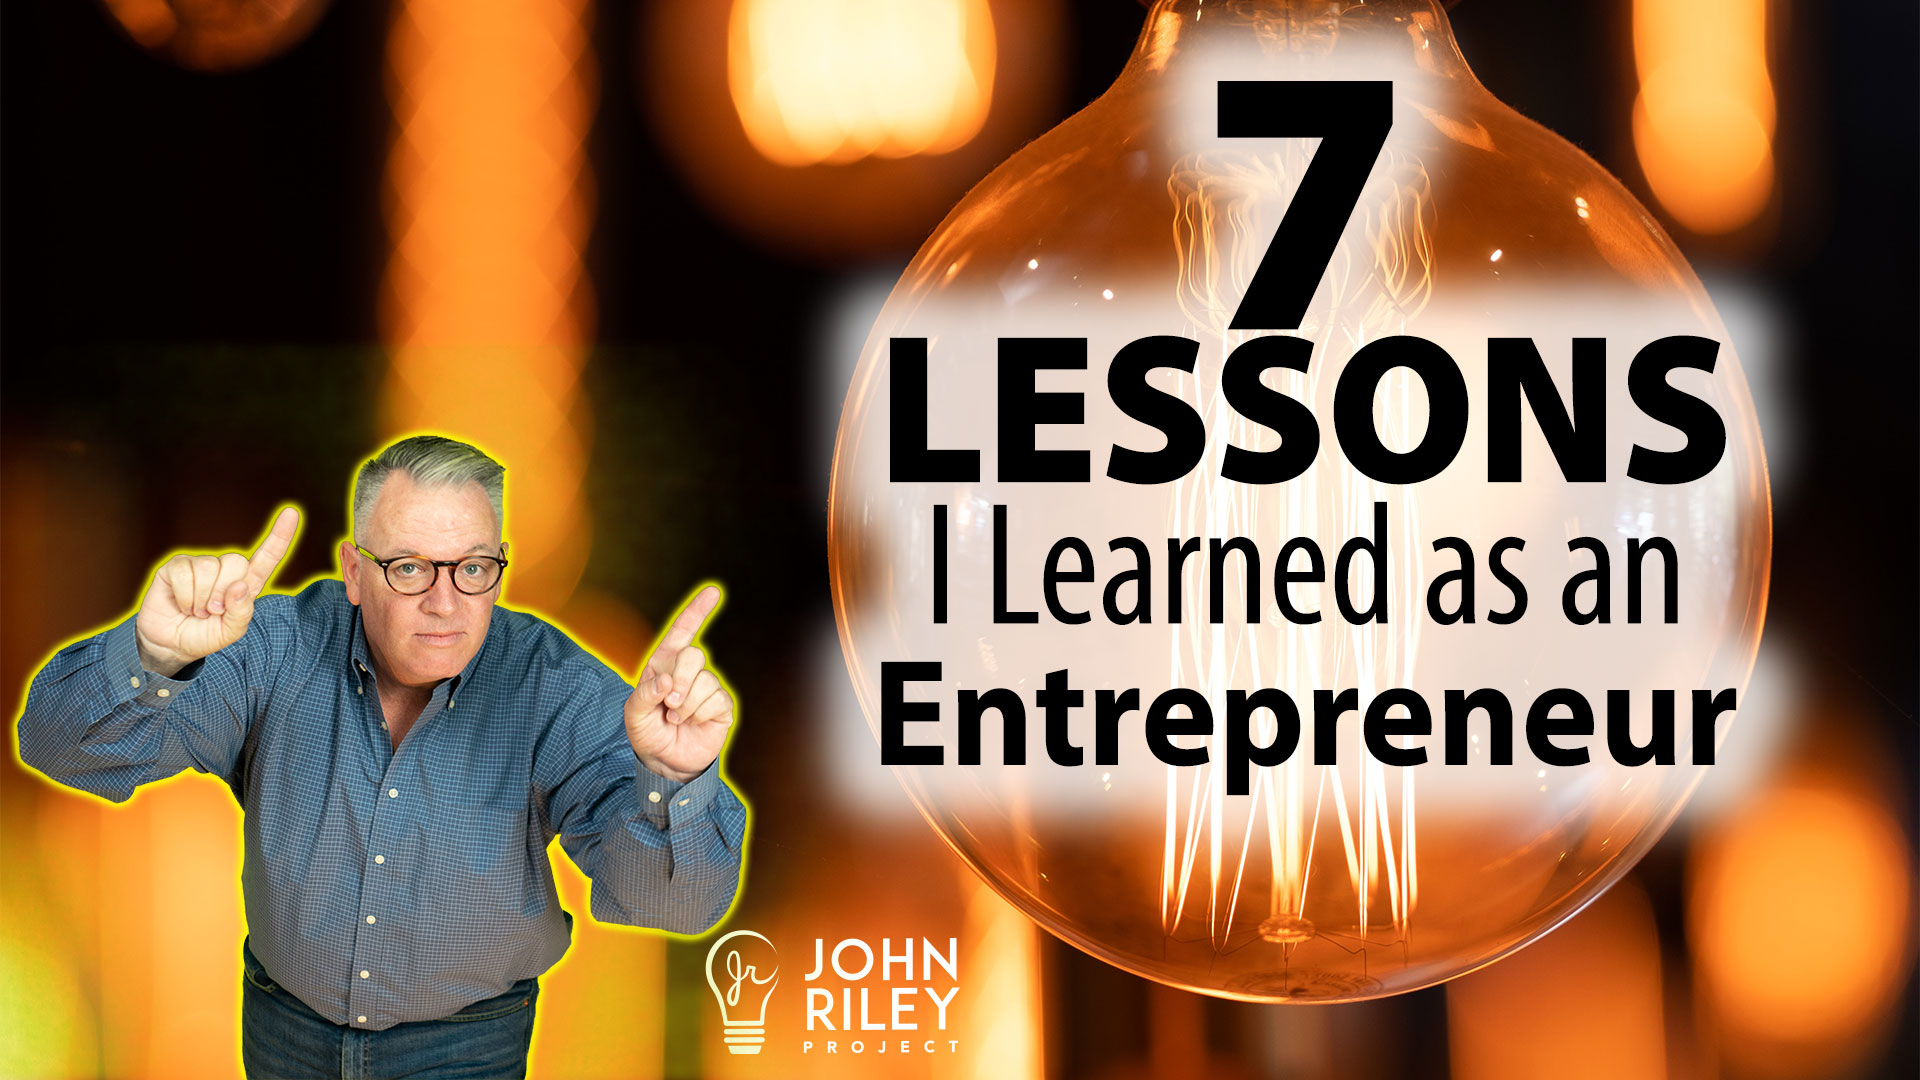 7 Lessons, Entrepreneur, Business Owner, John Riley Project, JRP0246